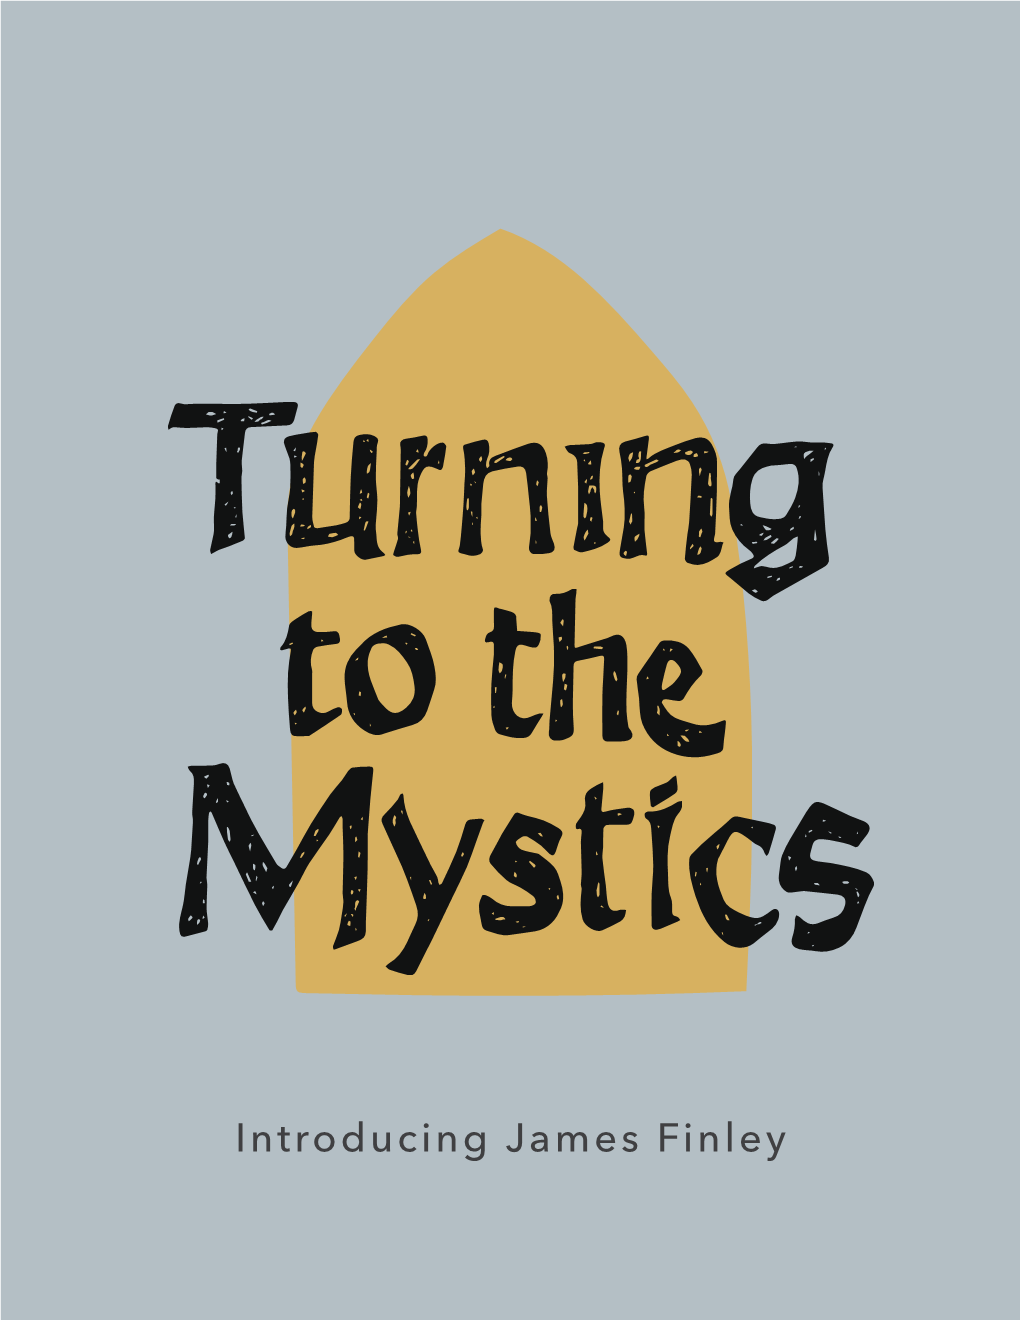 Introducing James Finley Jim Finley: Greetings